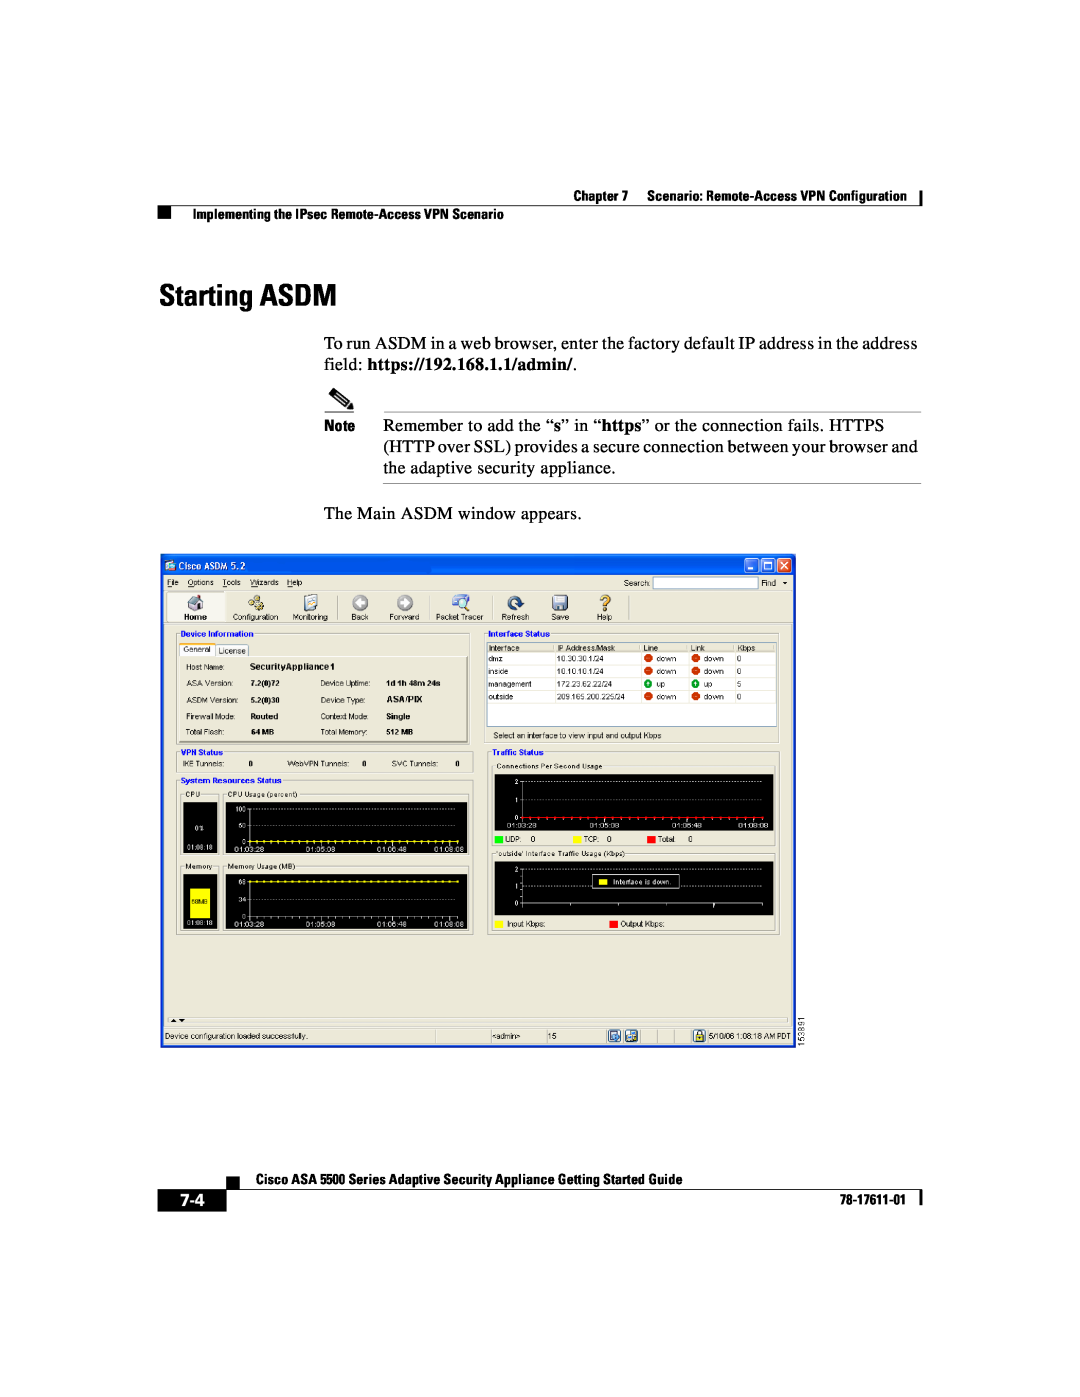 Cisco Systems ASA 5500 manual Starting ASDM, The Main ASDM window appears 